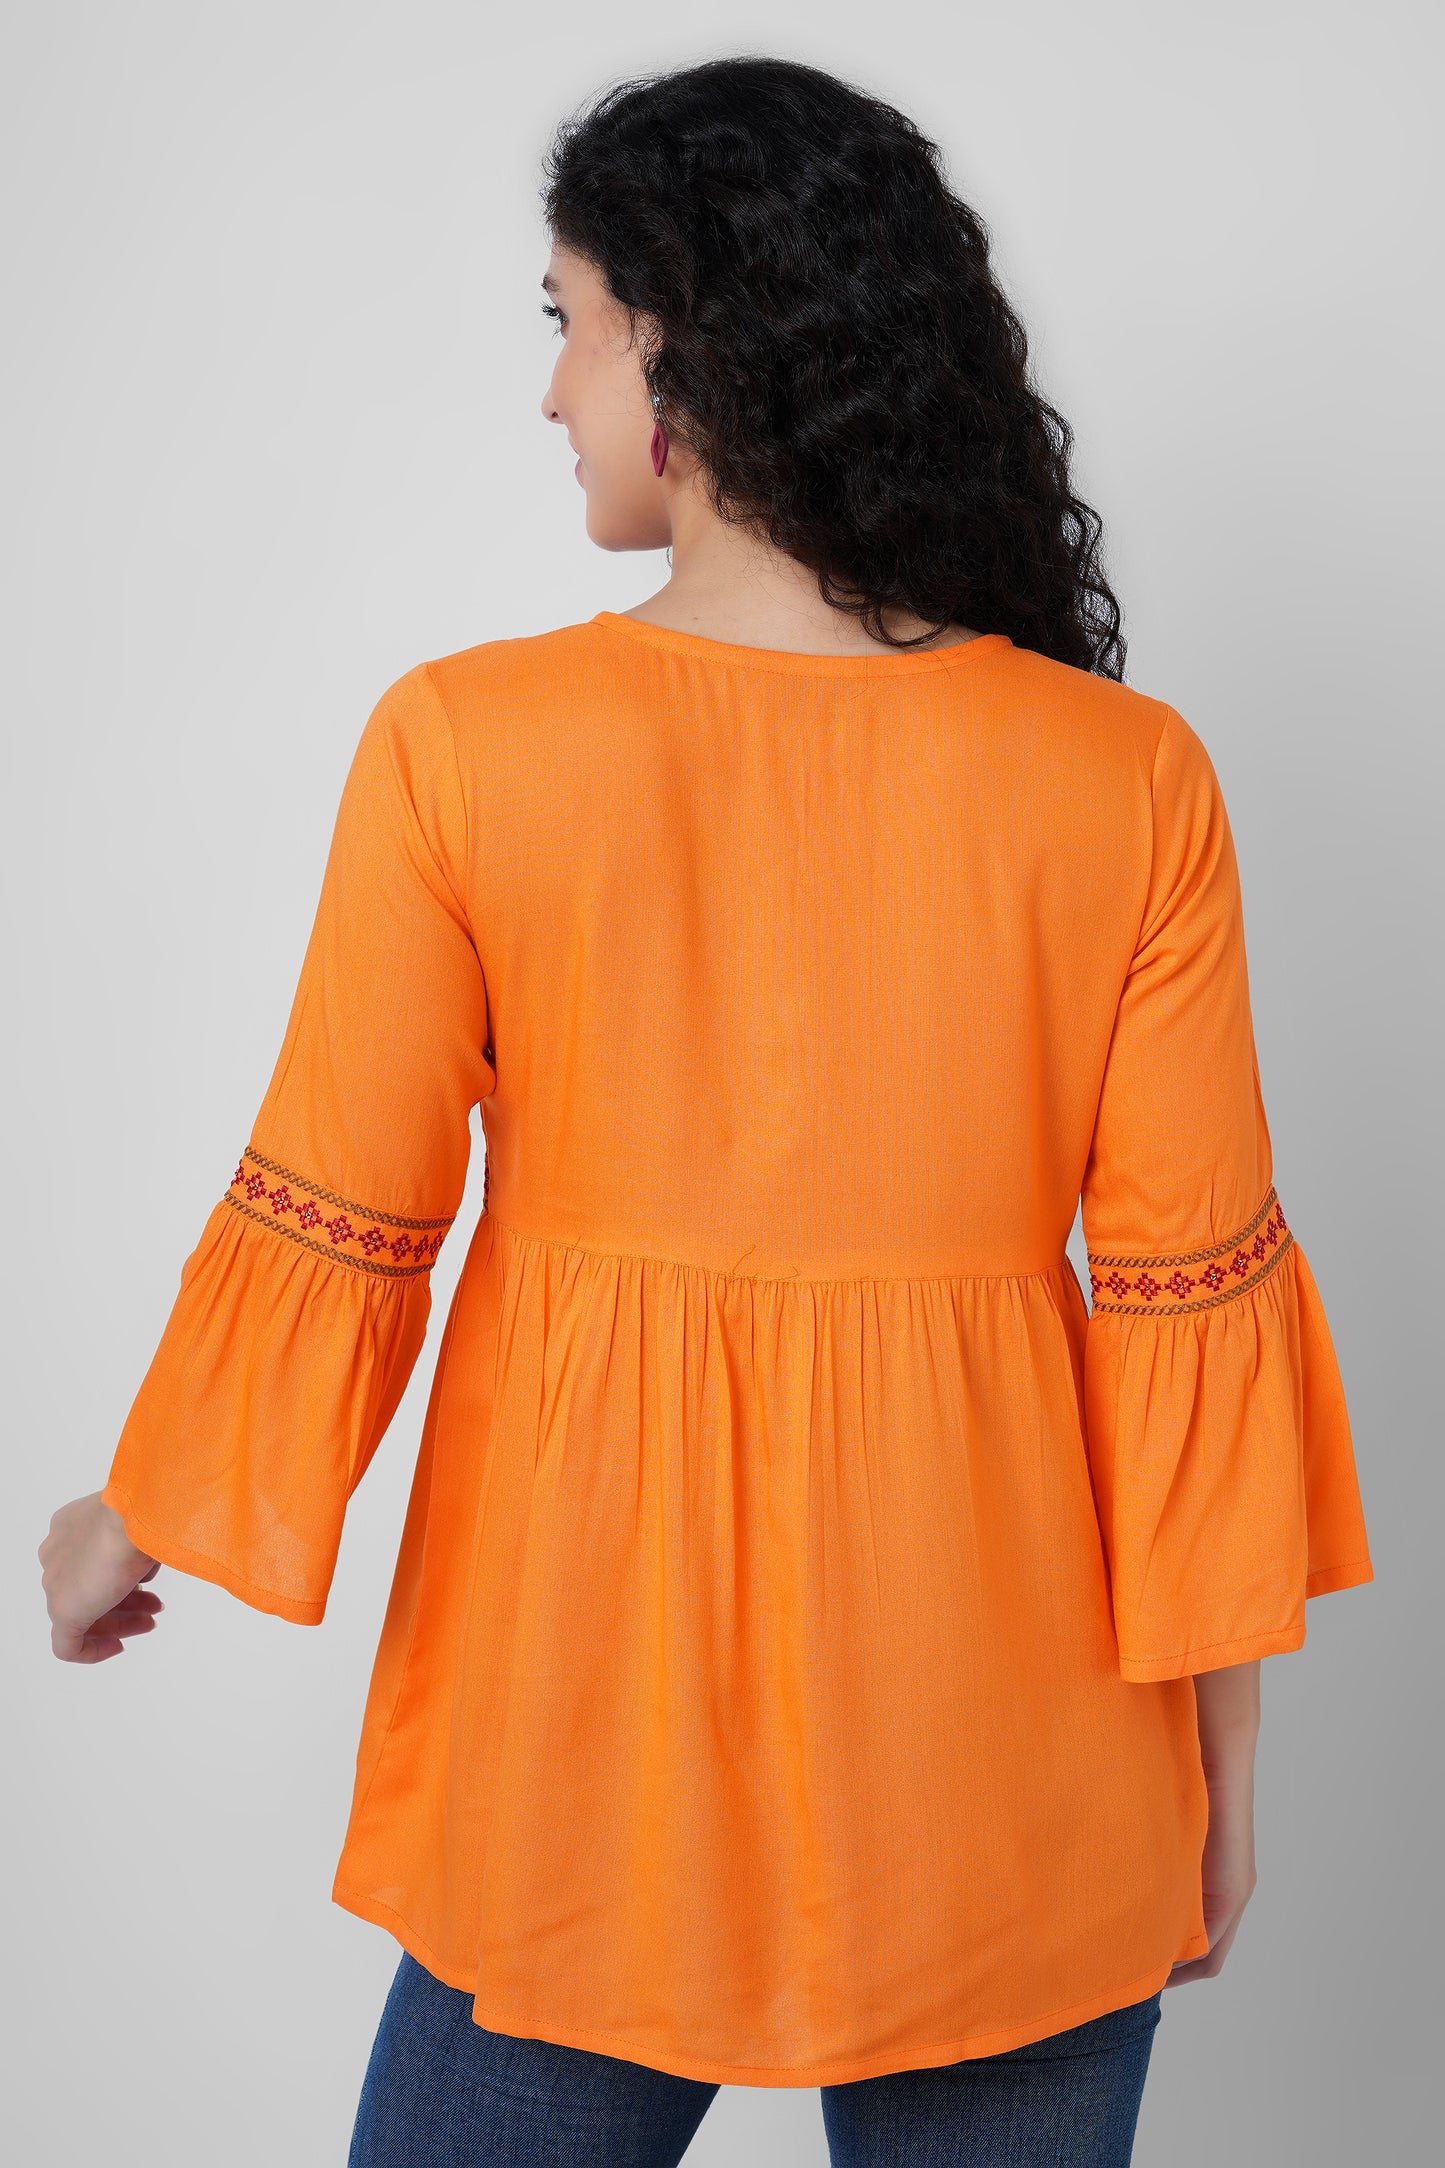 Orange Embellished Top With Bell Sleeves